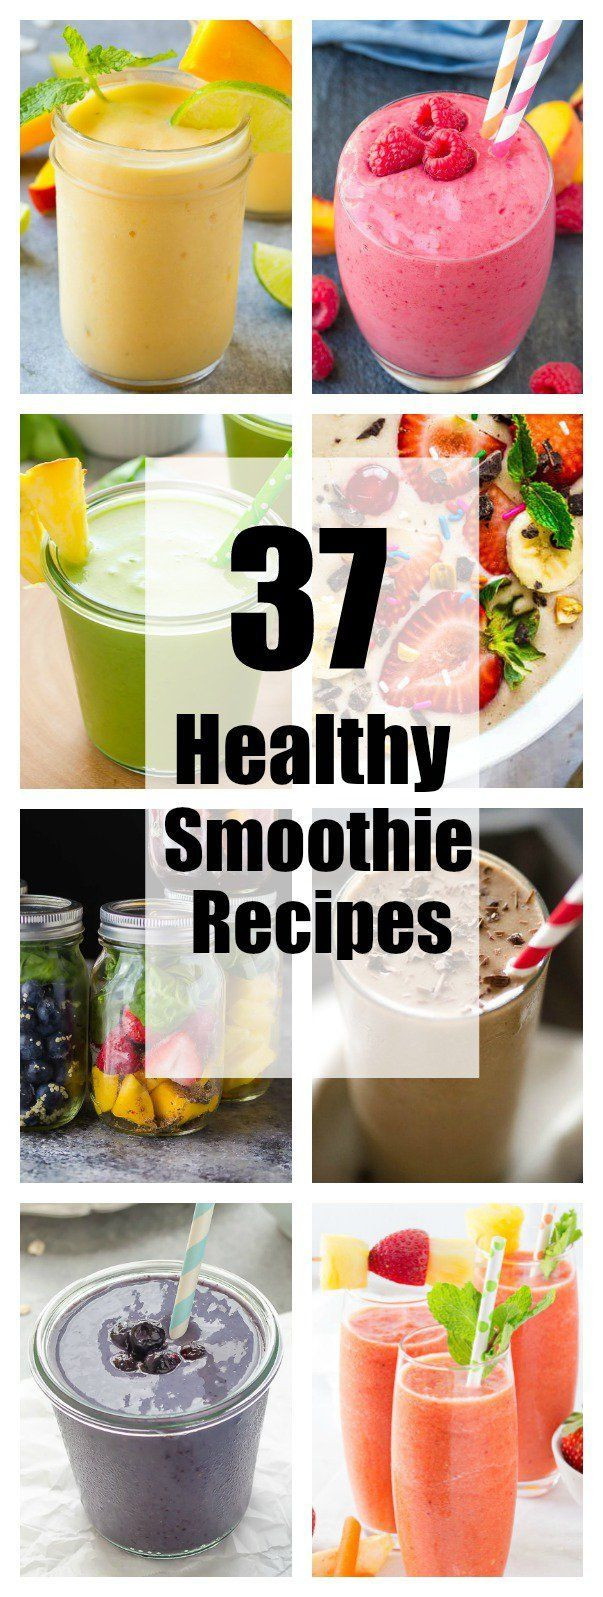 Diabetic Fruit Smoothie Recipes
 100 Diabetic Smoothie Recipes on Pinterest